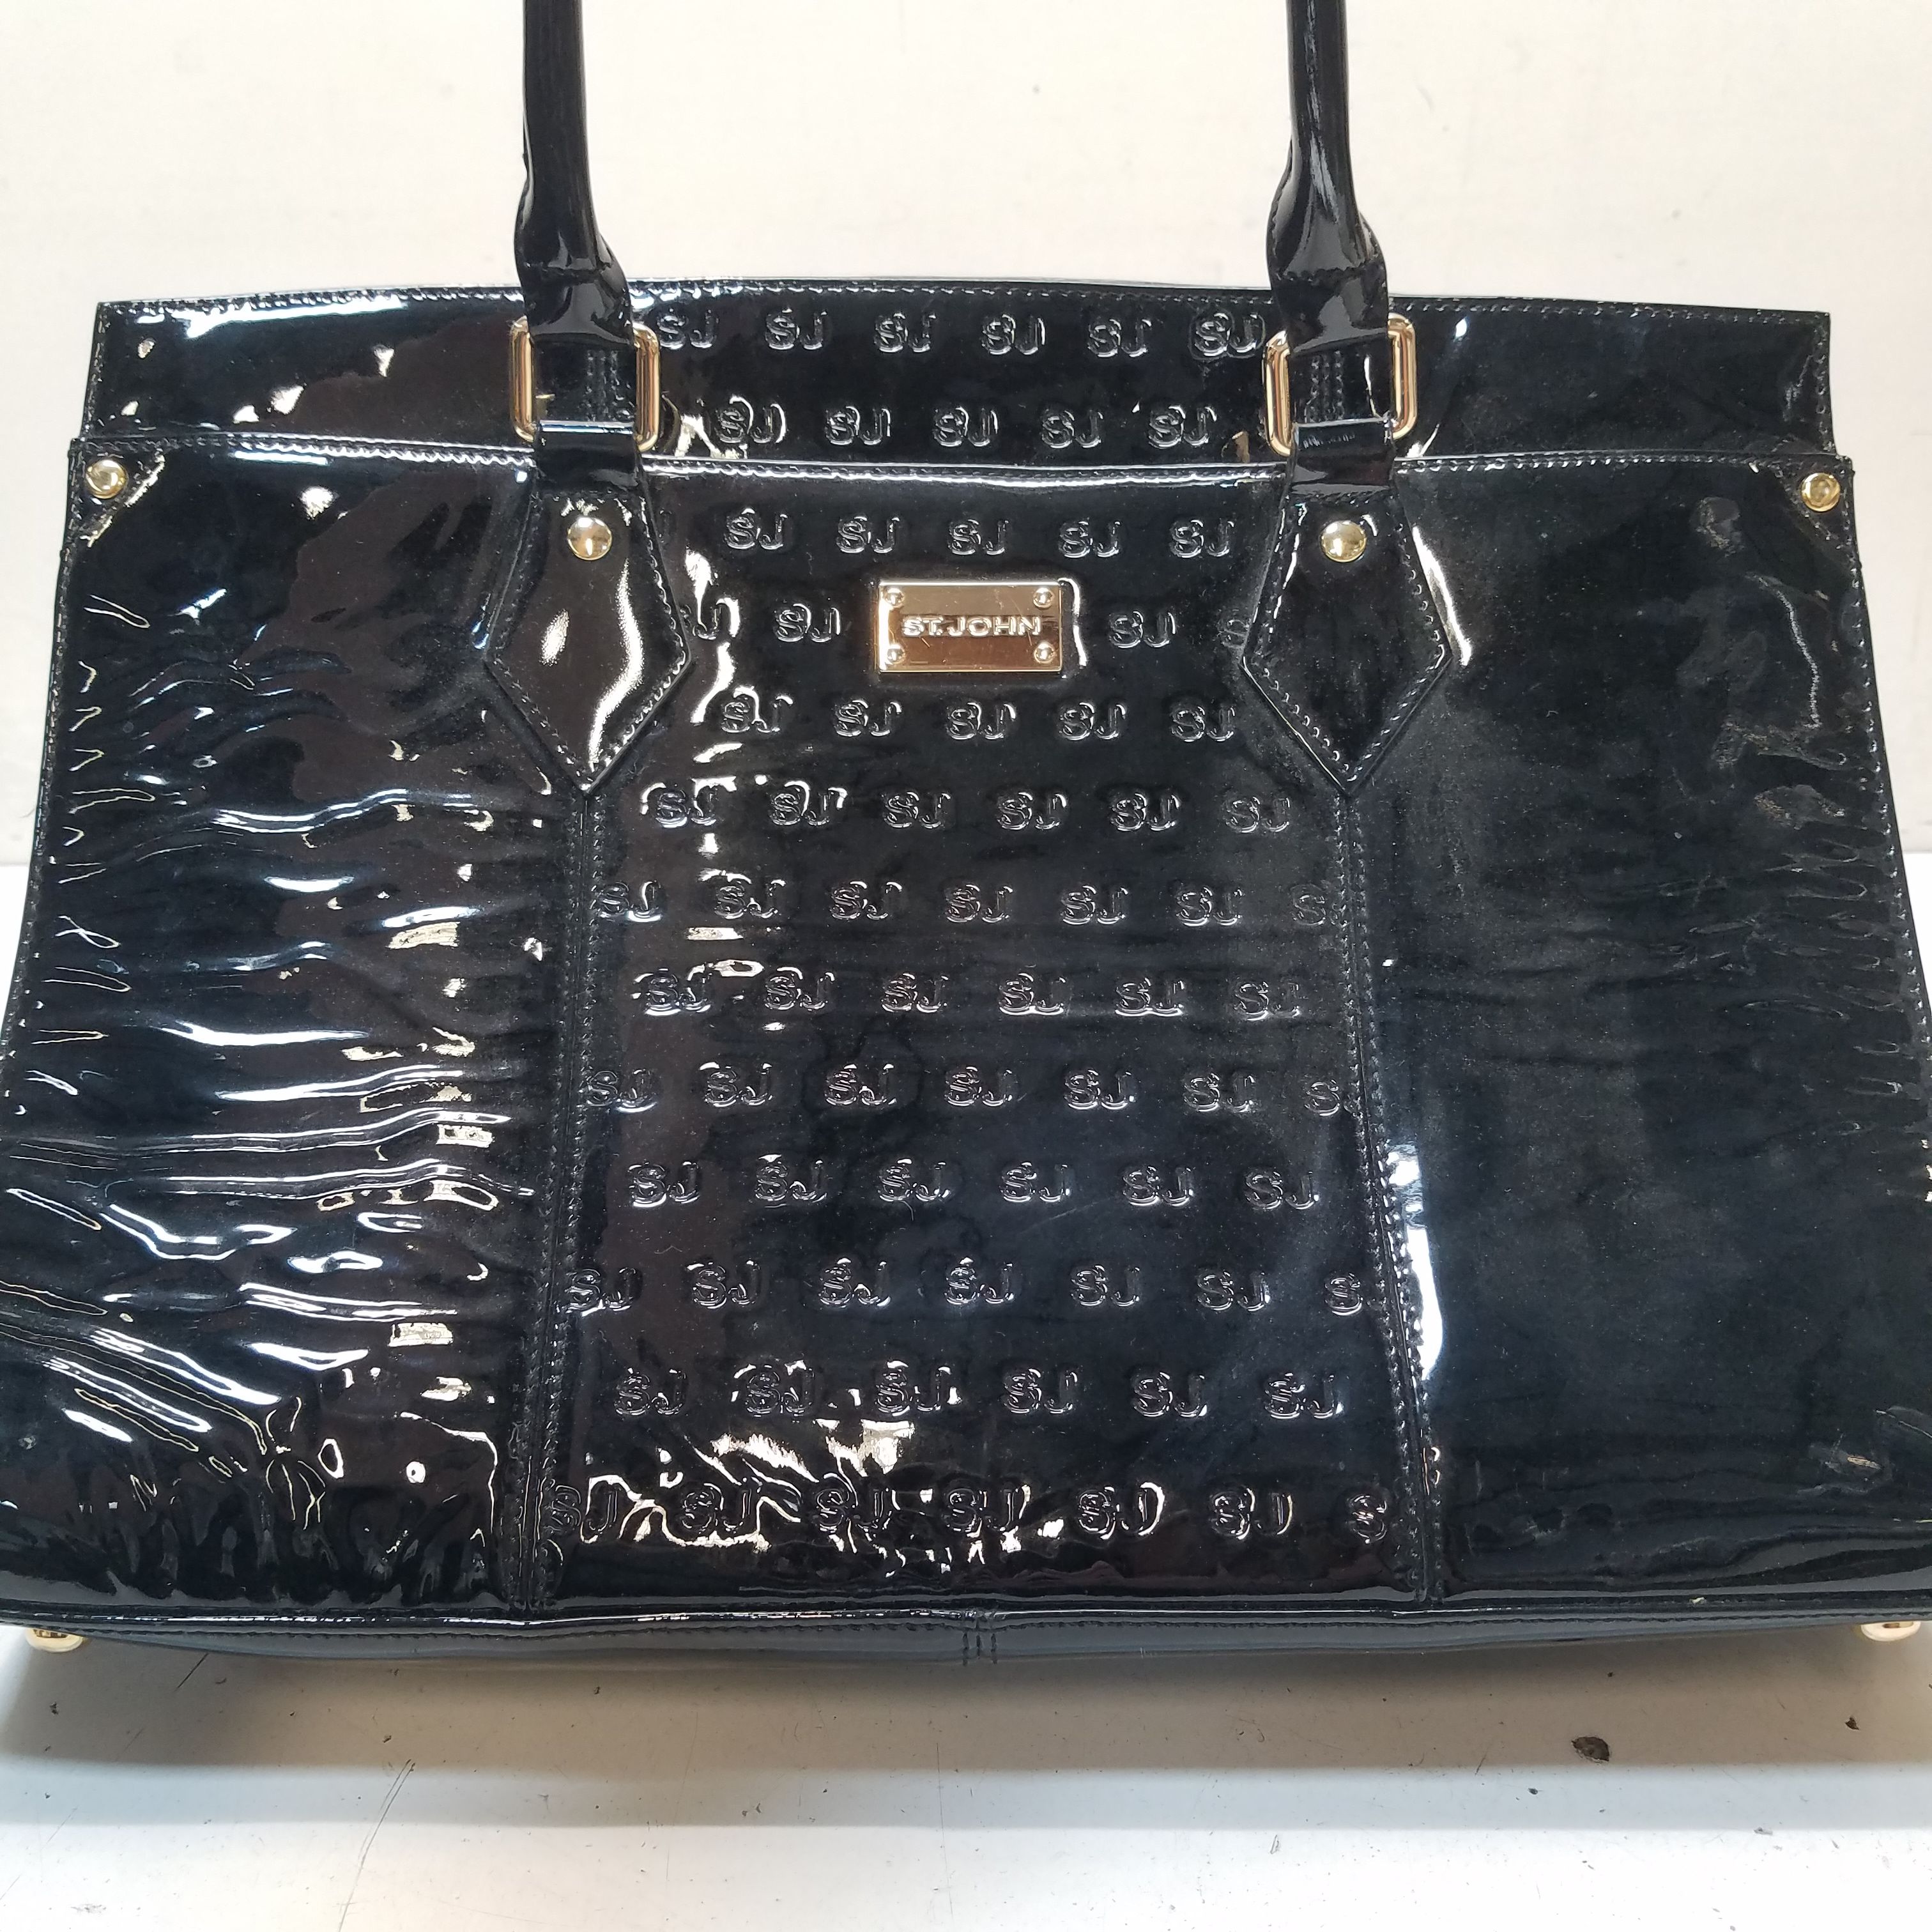 St. John Black Patent Leather Large Satchel Bag Handbag